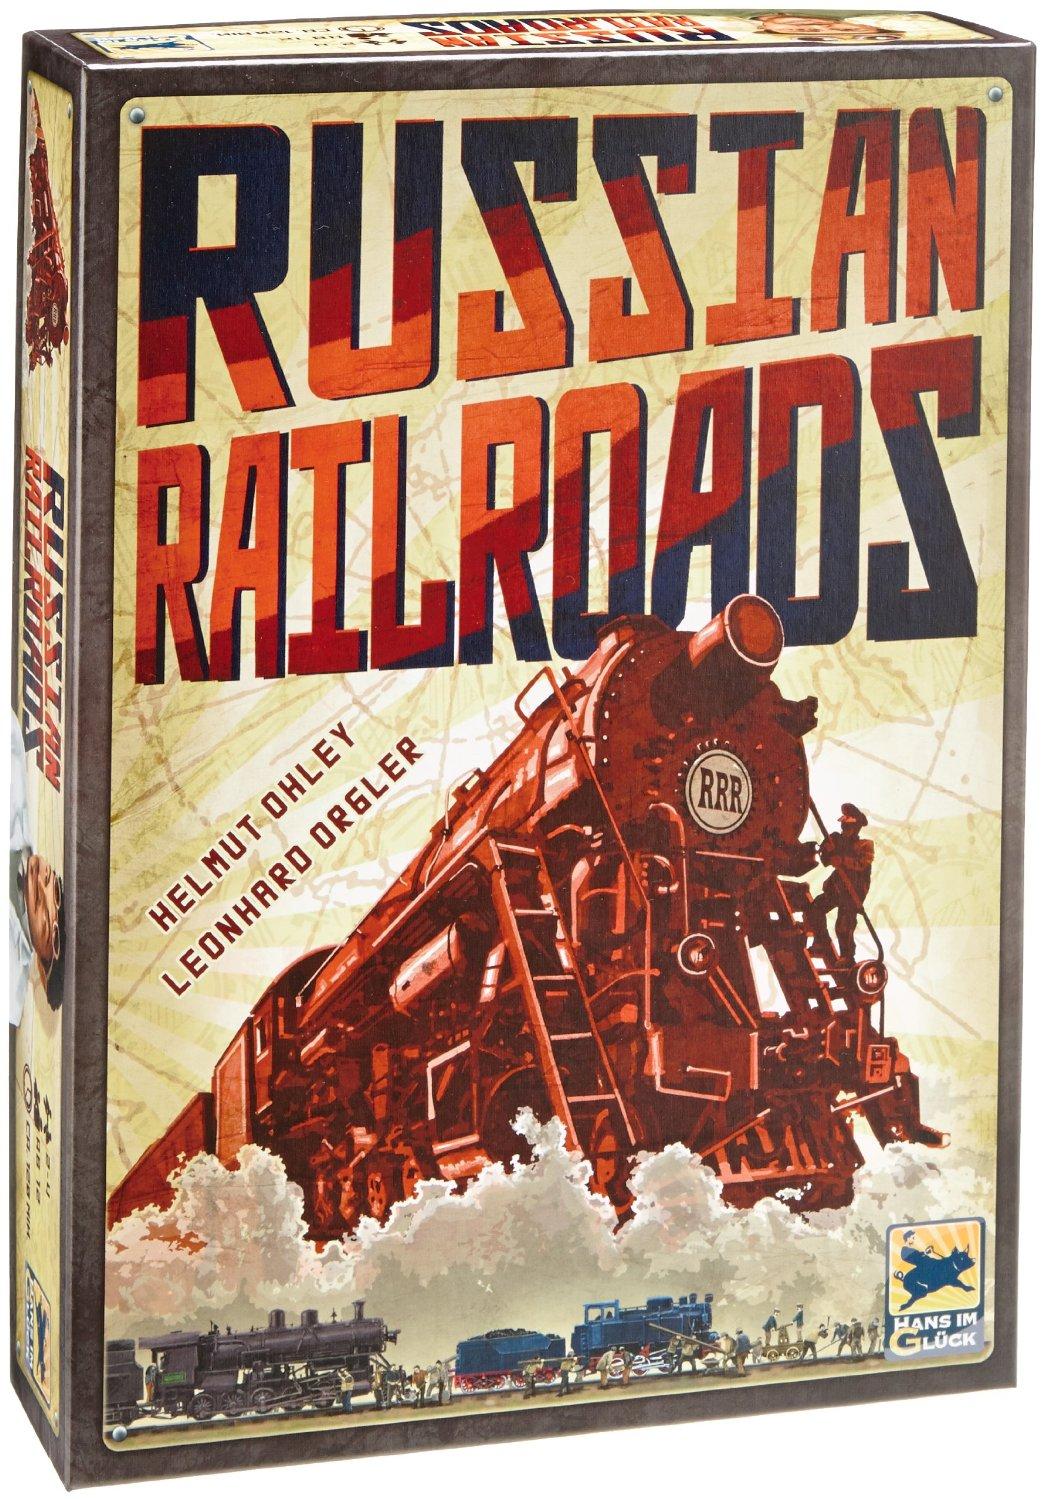 Russian Railroads Spielanleitung – PDF Download 0 (0)